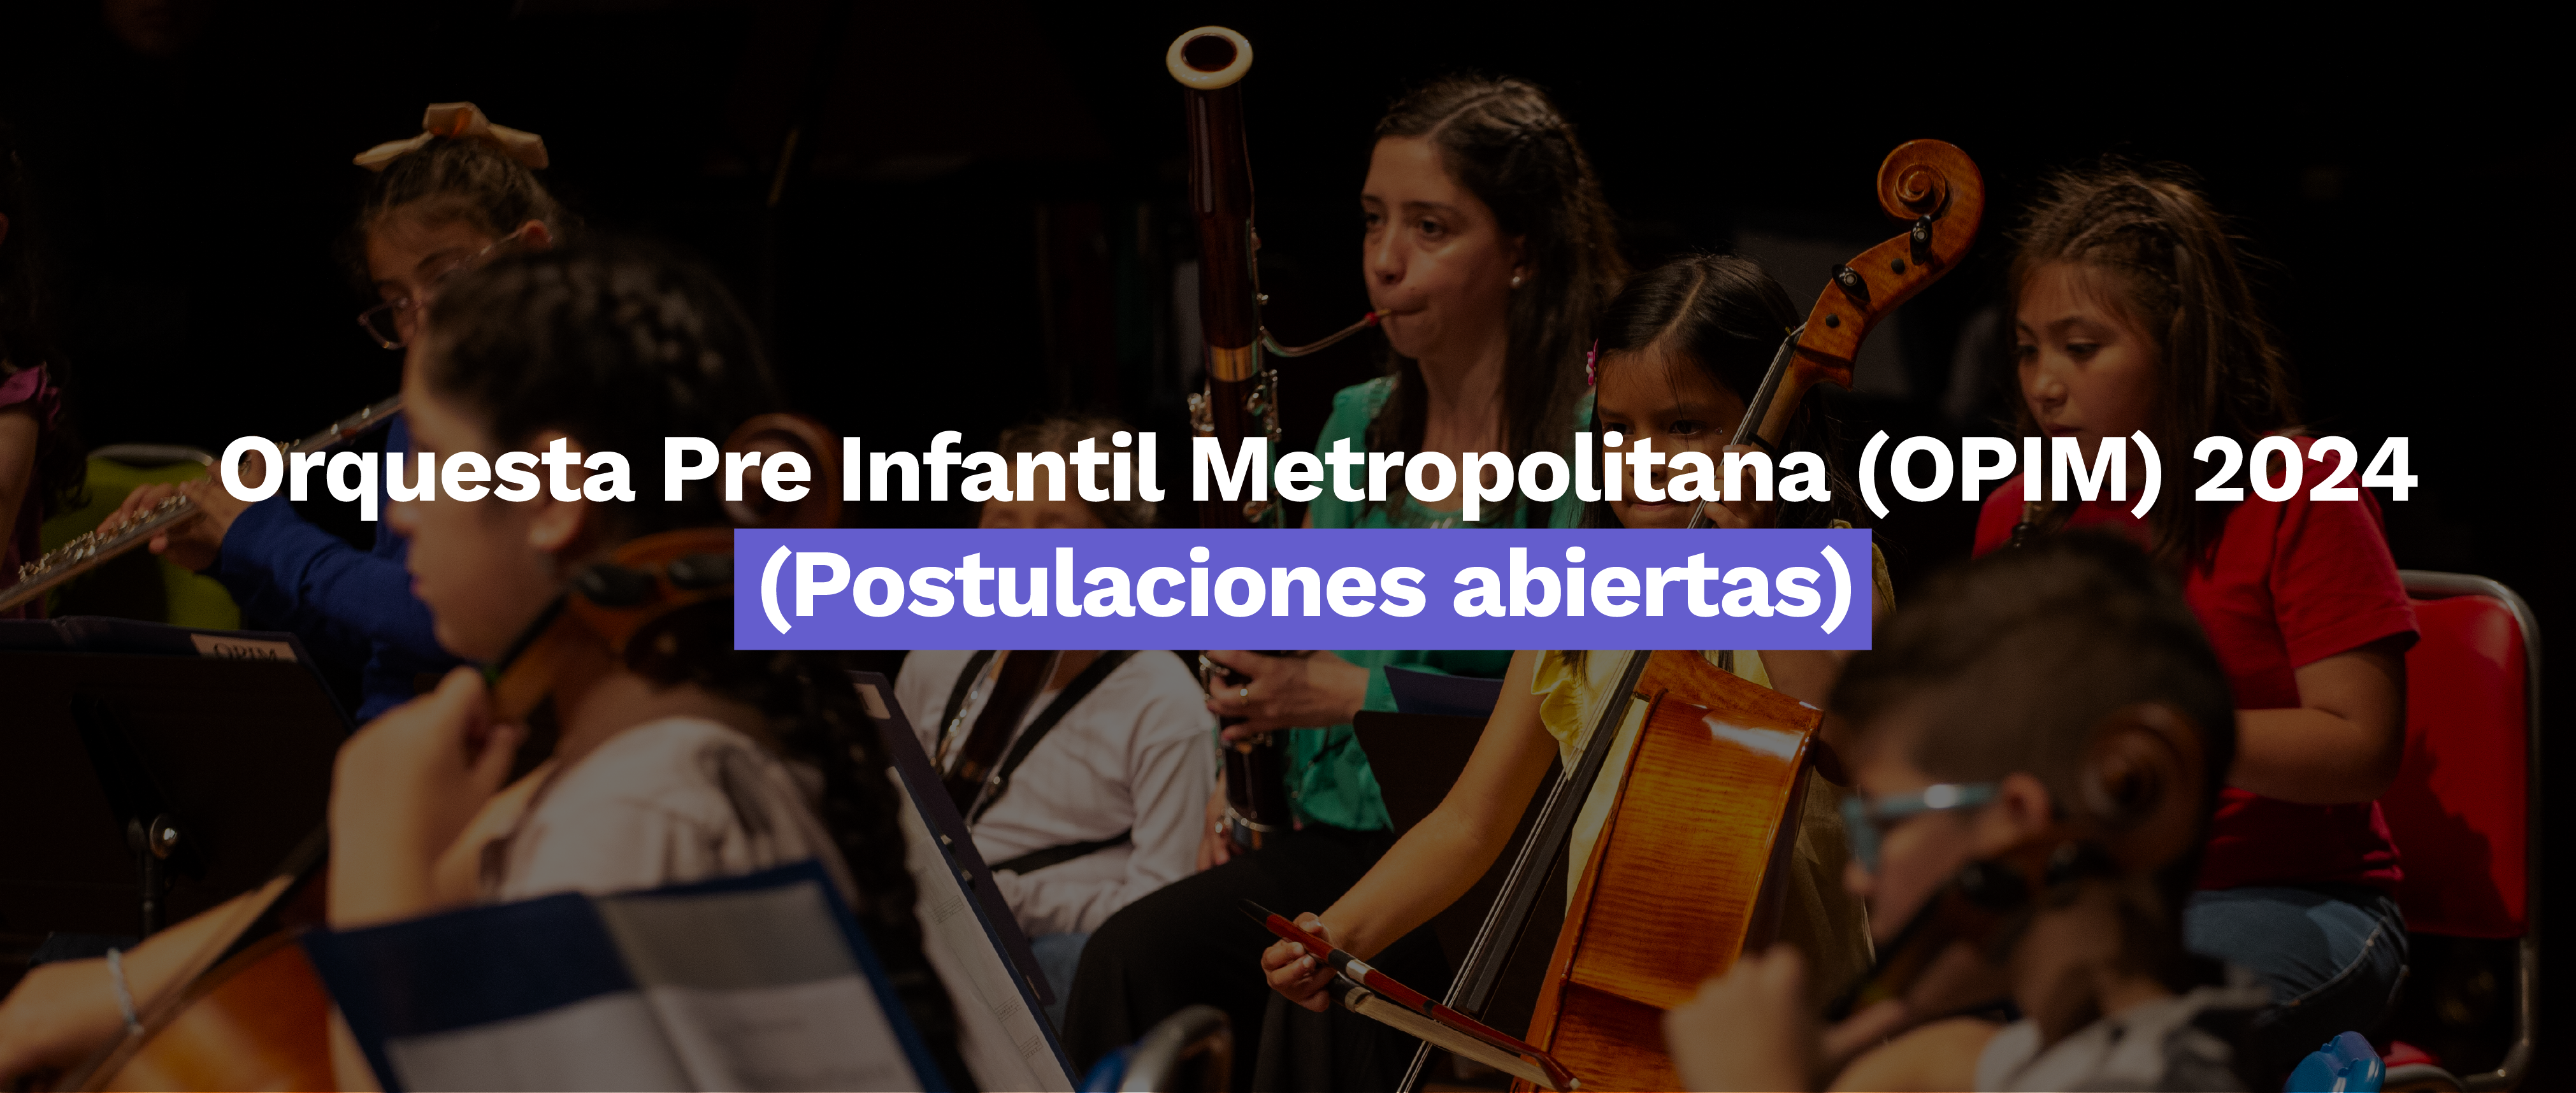 Orquesta Pre Infantil Metropolitana (OPIM) 2024